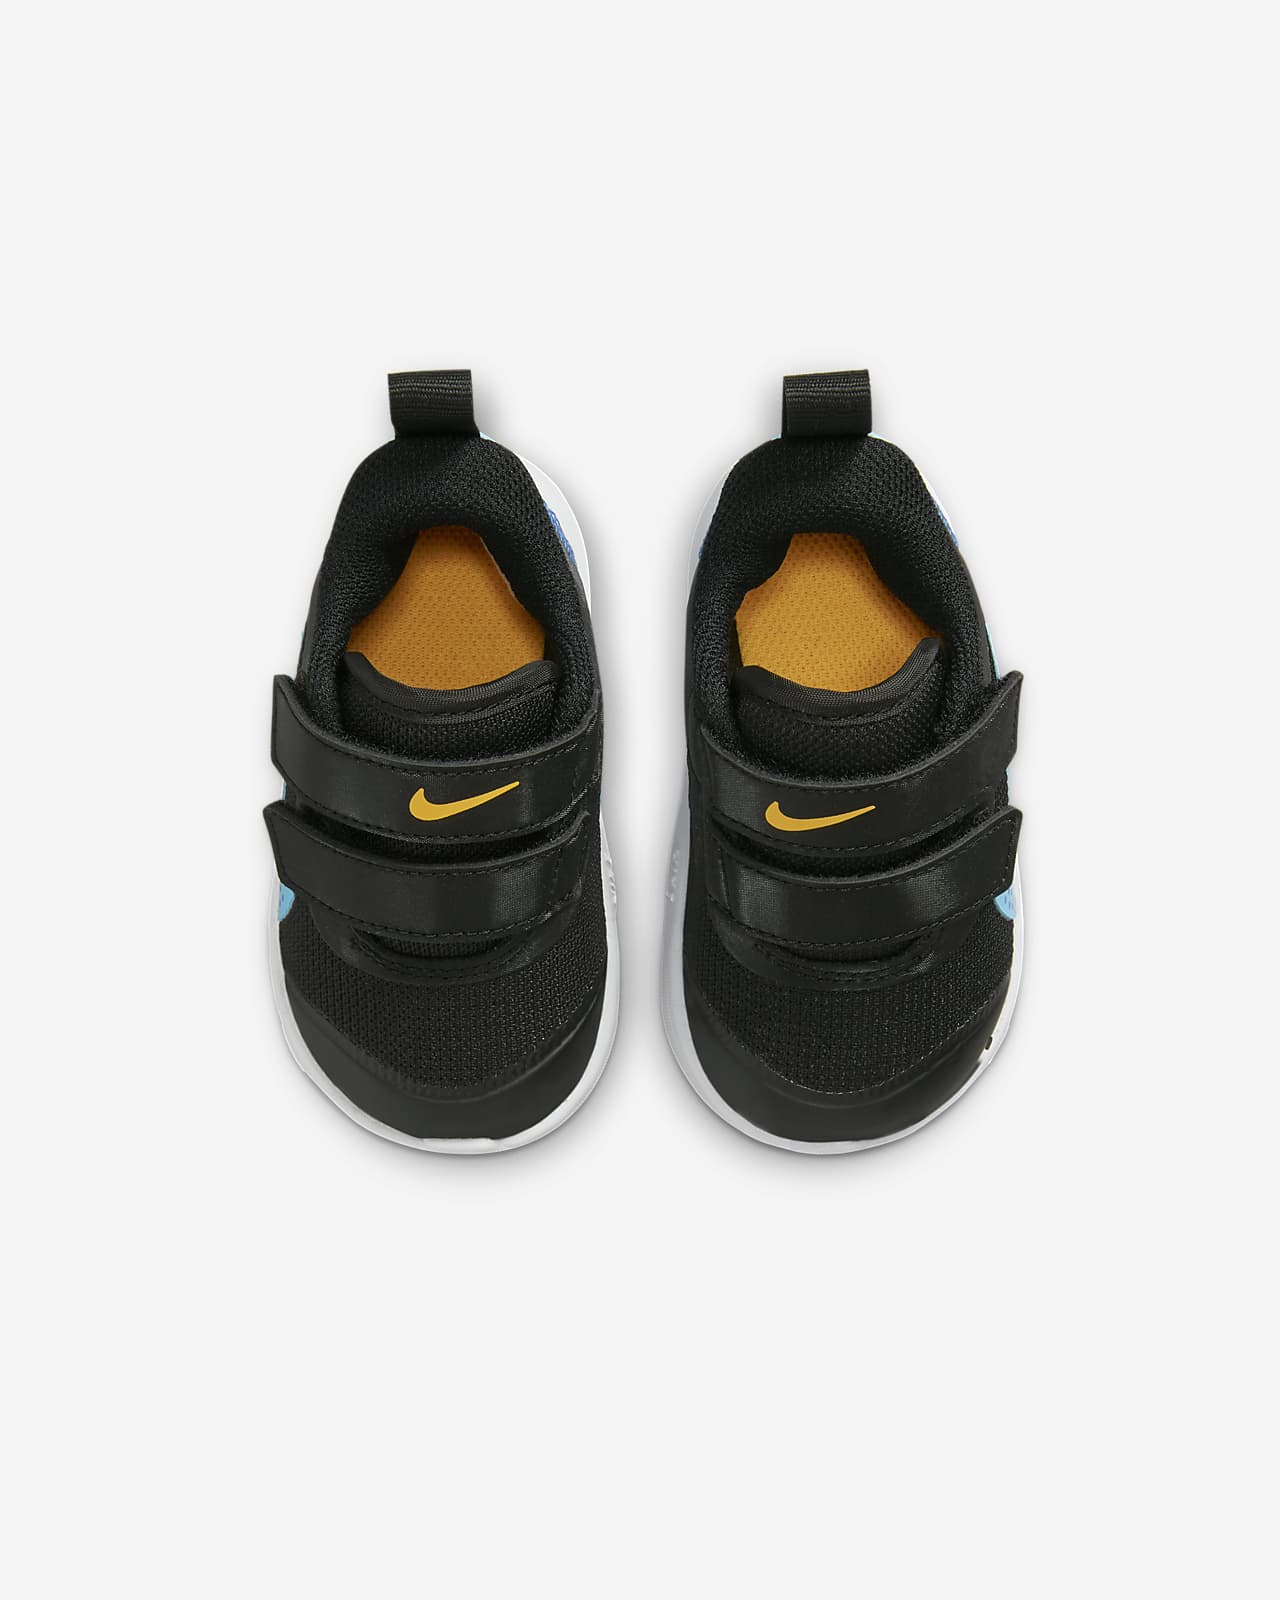 Nike Omni Shoes. Multi-Court Baby/Toddler Nike ID